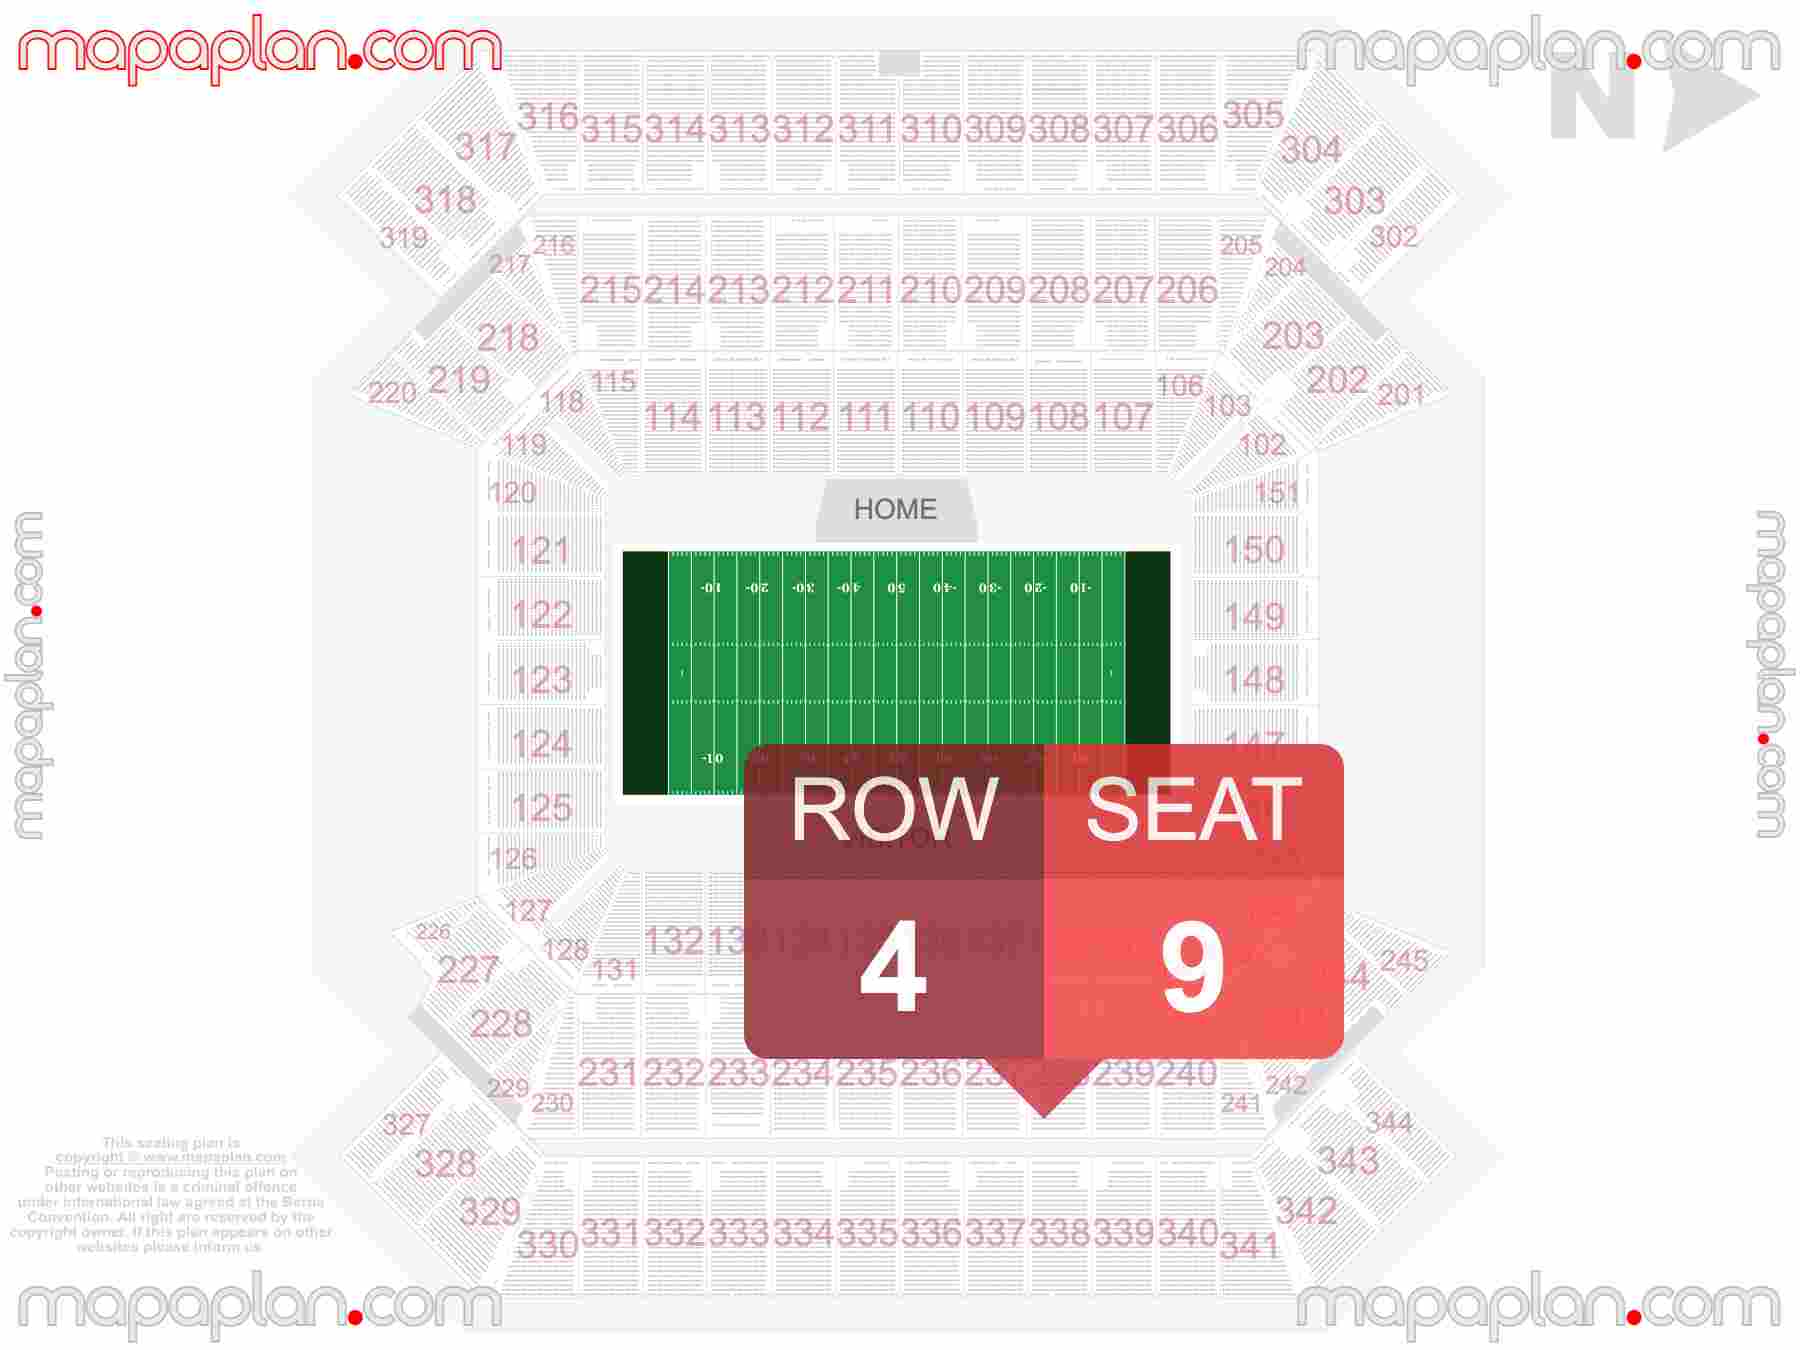 Tampa Raymond James Stadium seating chart Buccaneers football inside capacity view arrangement plan - Interactive virtual 3d best seats & rows detailed stadium image configuration layout